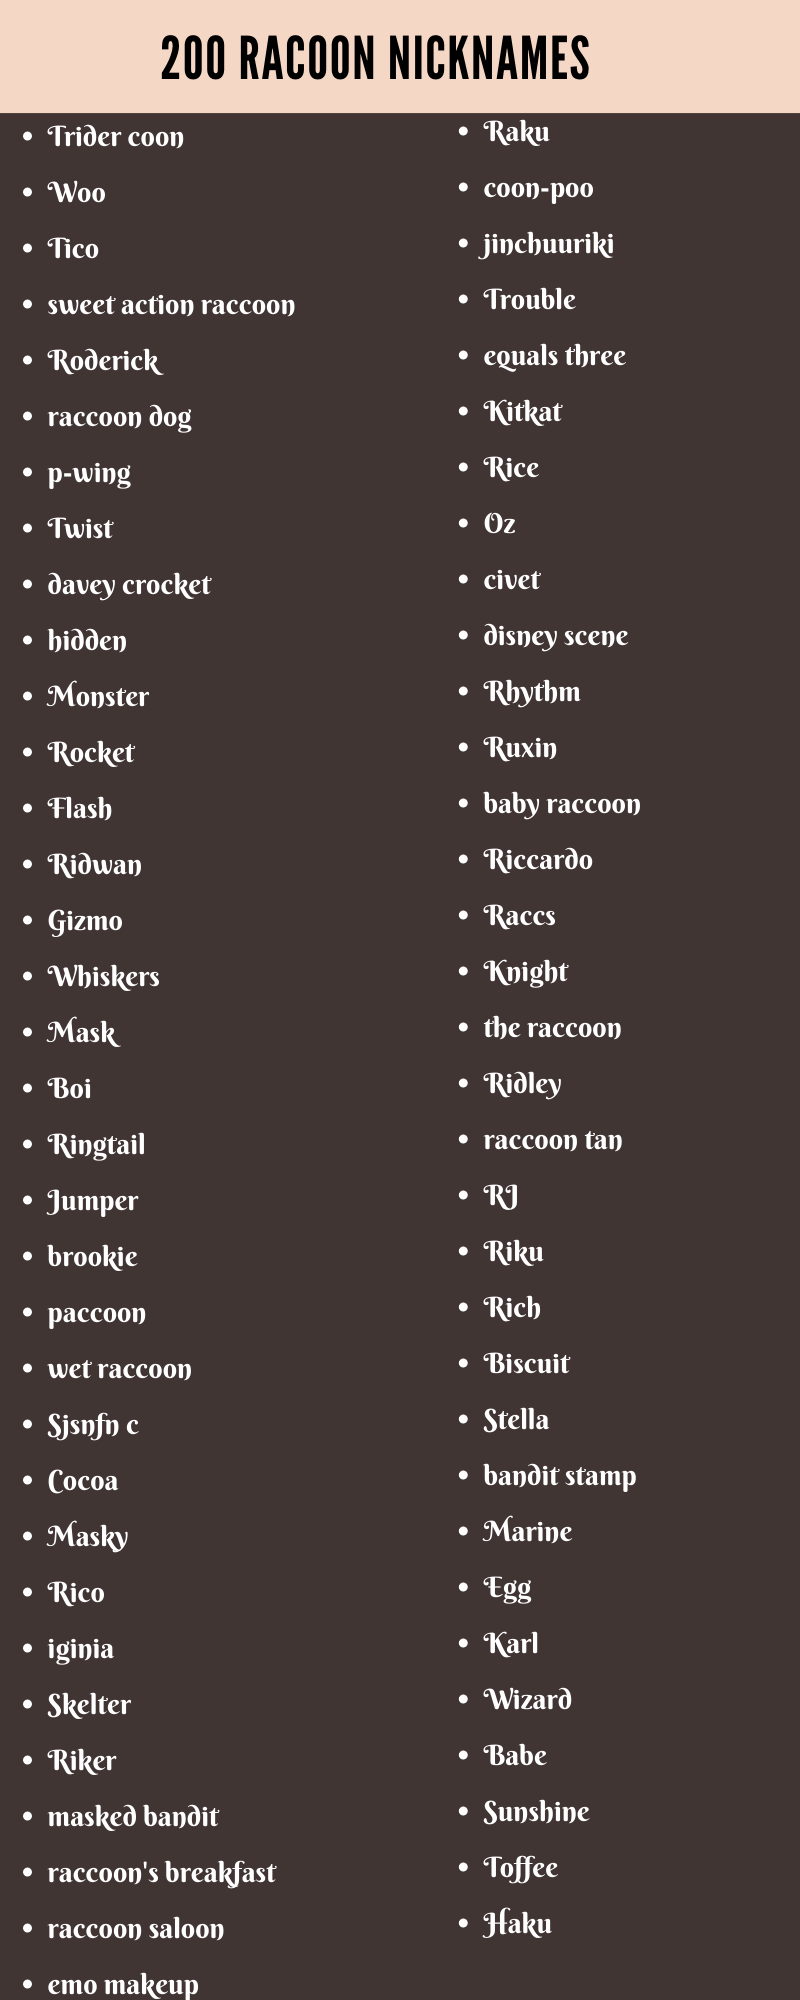 Racoon Nicknames